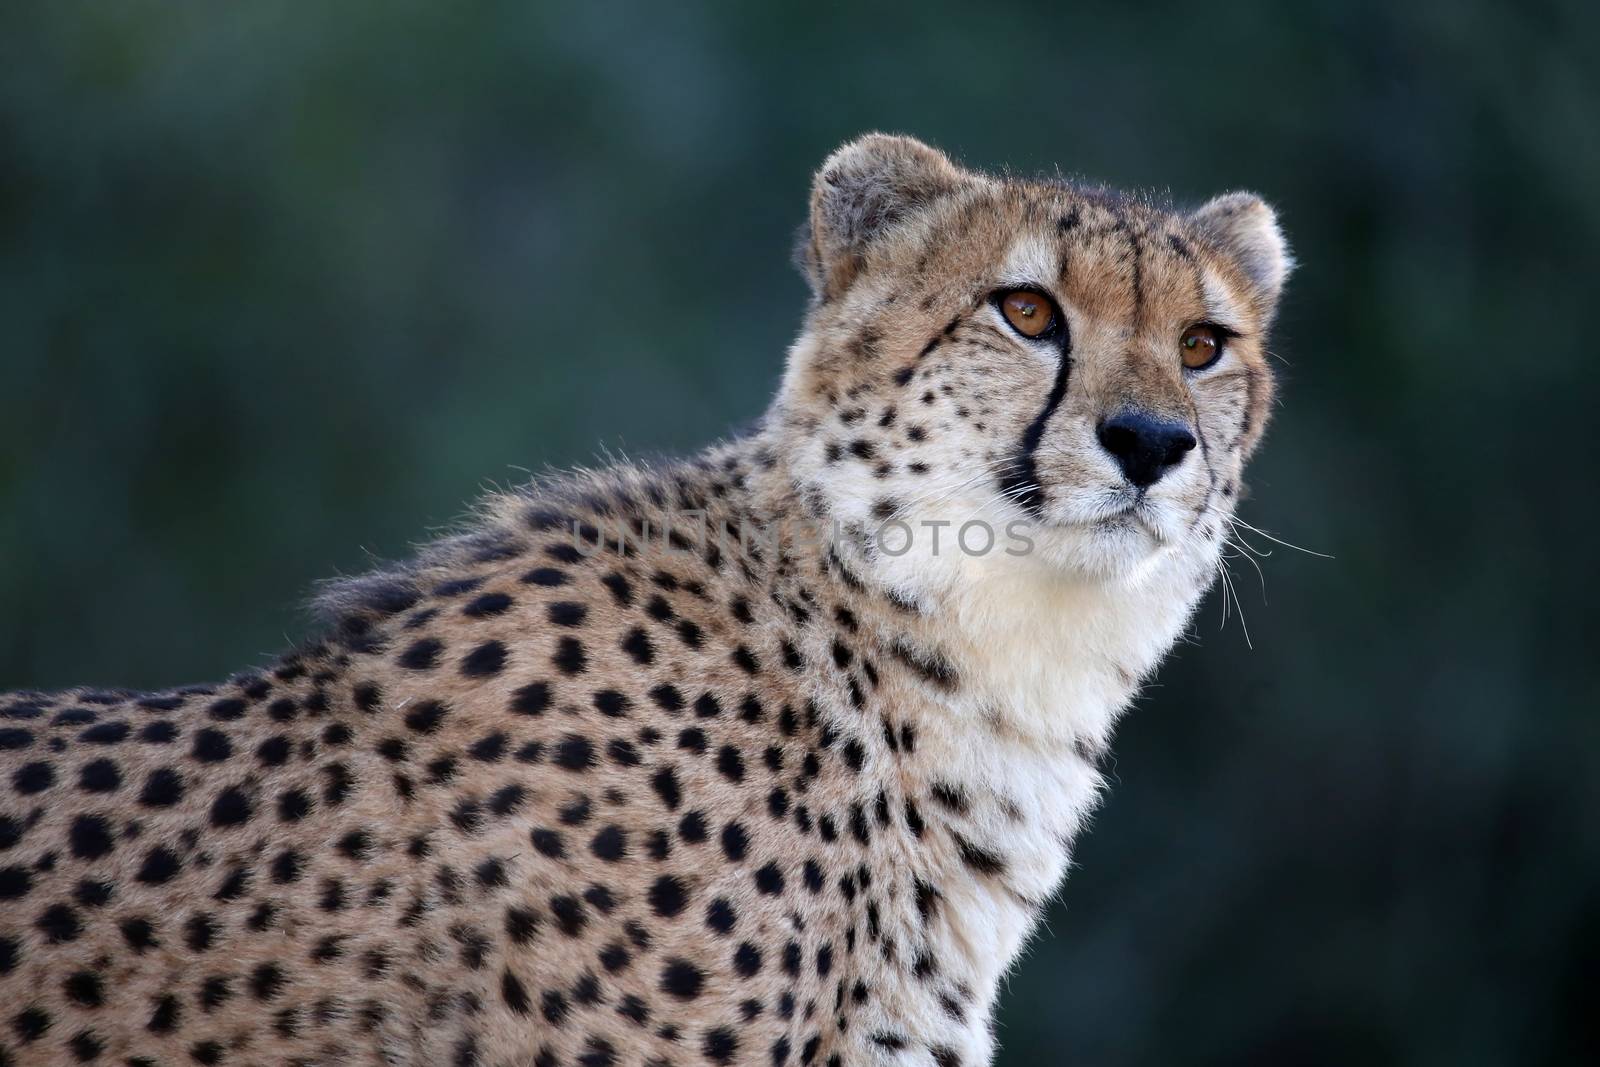 Cheetah Portrait by fouroaks